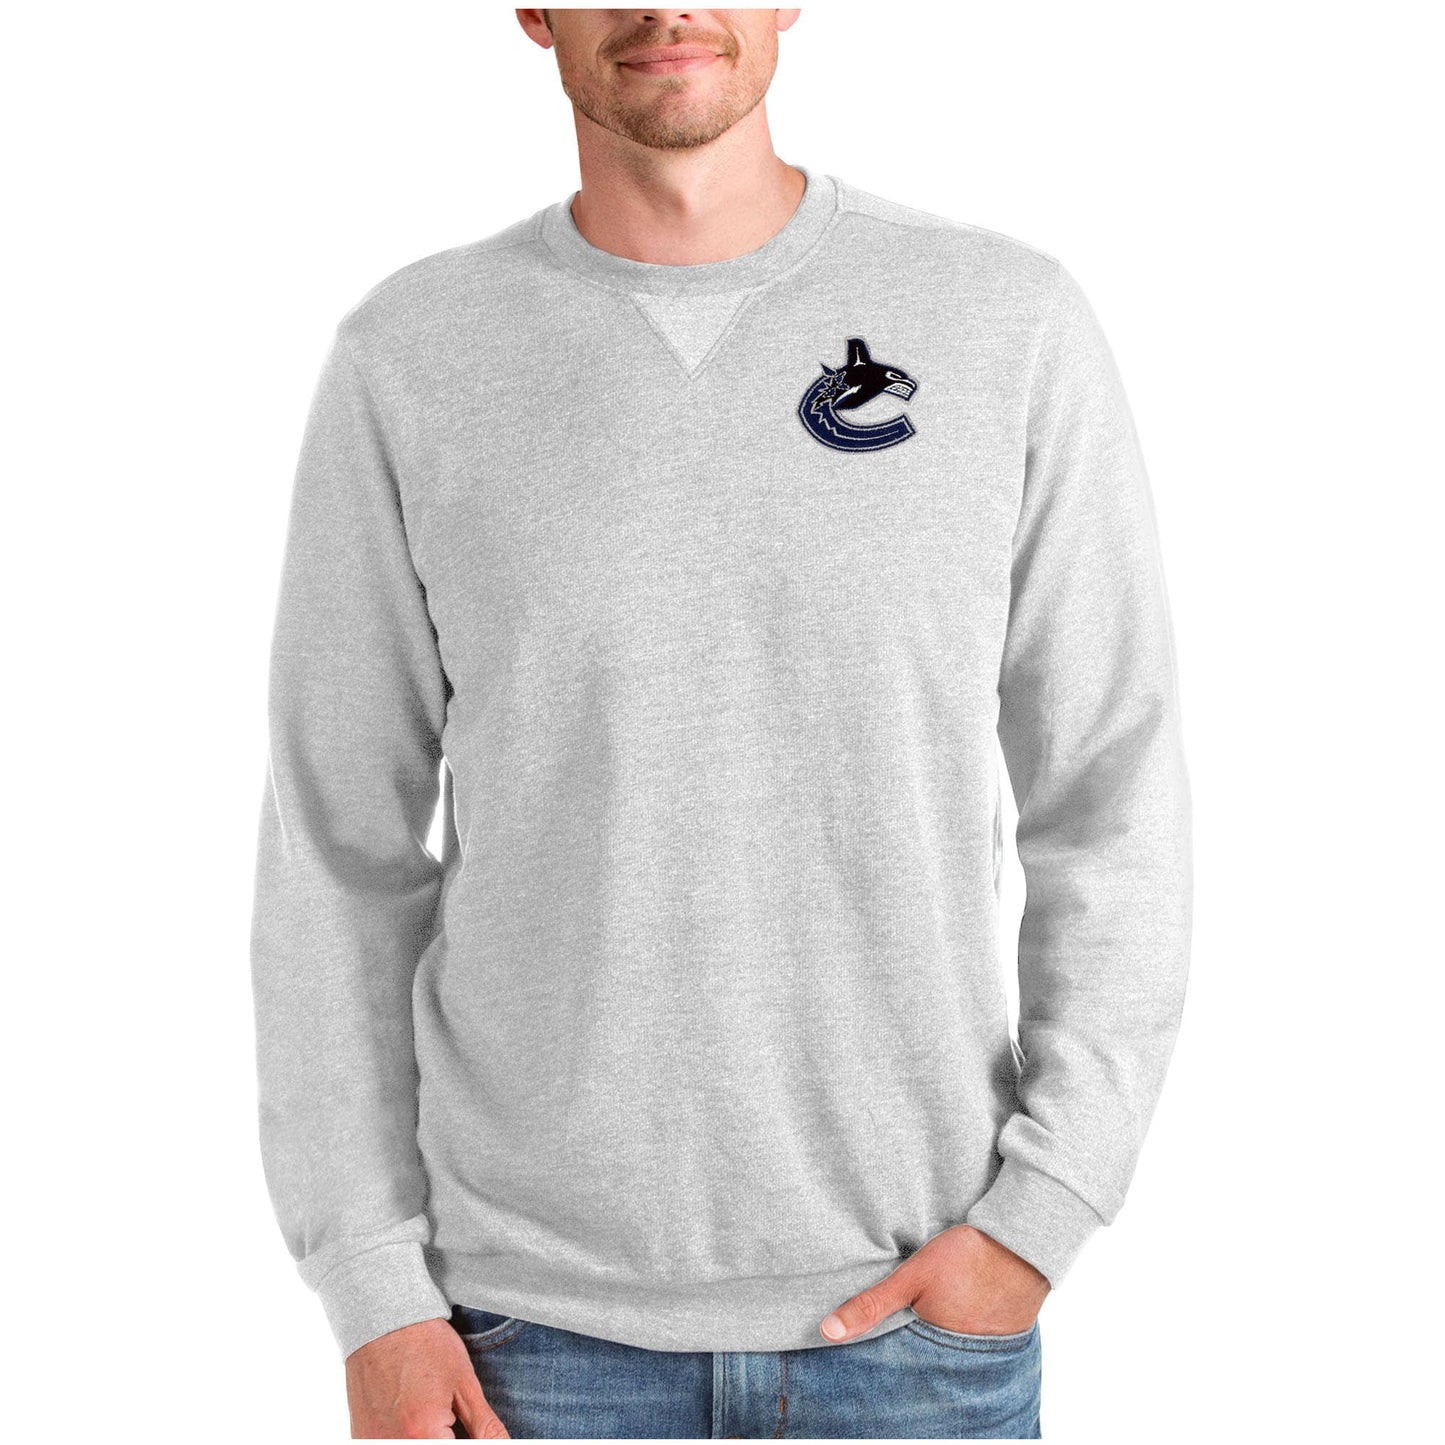 Men's Antigua Heathered Gray Vancouver Canucks Reward Crewneck Pullover Sweatshirt